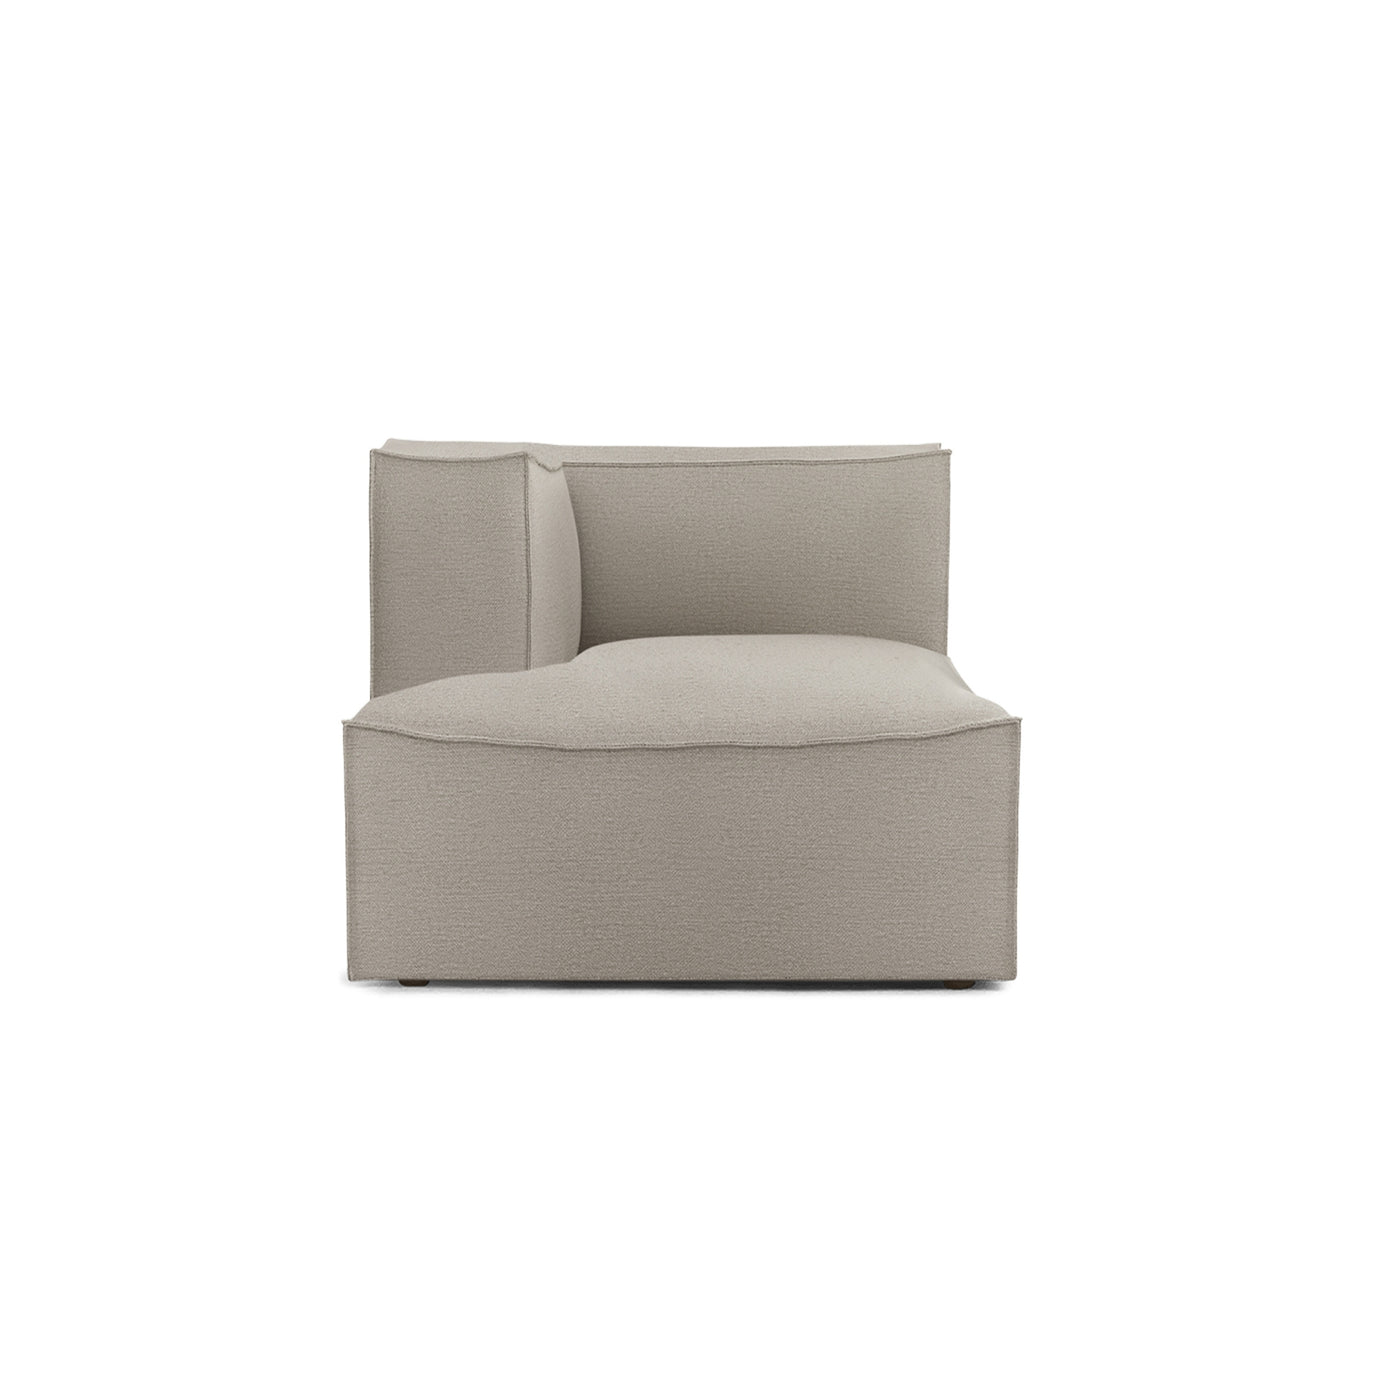 ferm LIVING Catena modular sofa in cotton linen. Made to order from someday designs. #colour_cotton-linen